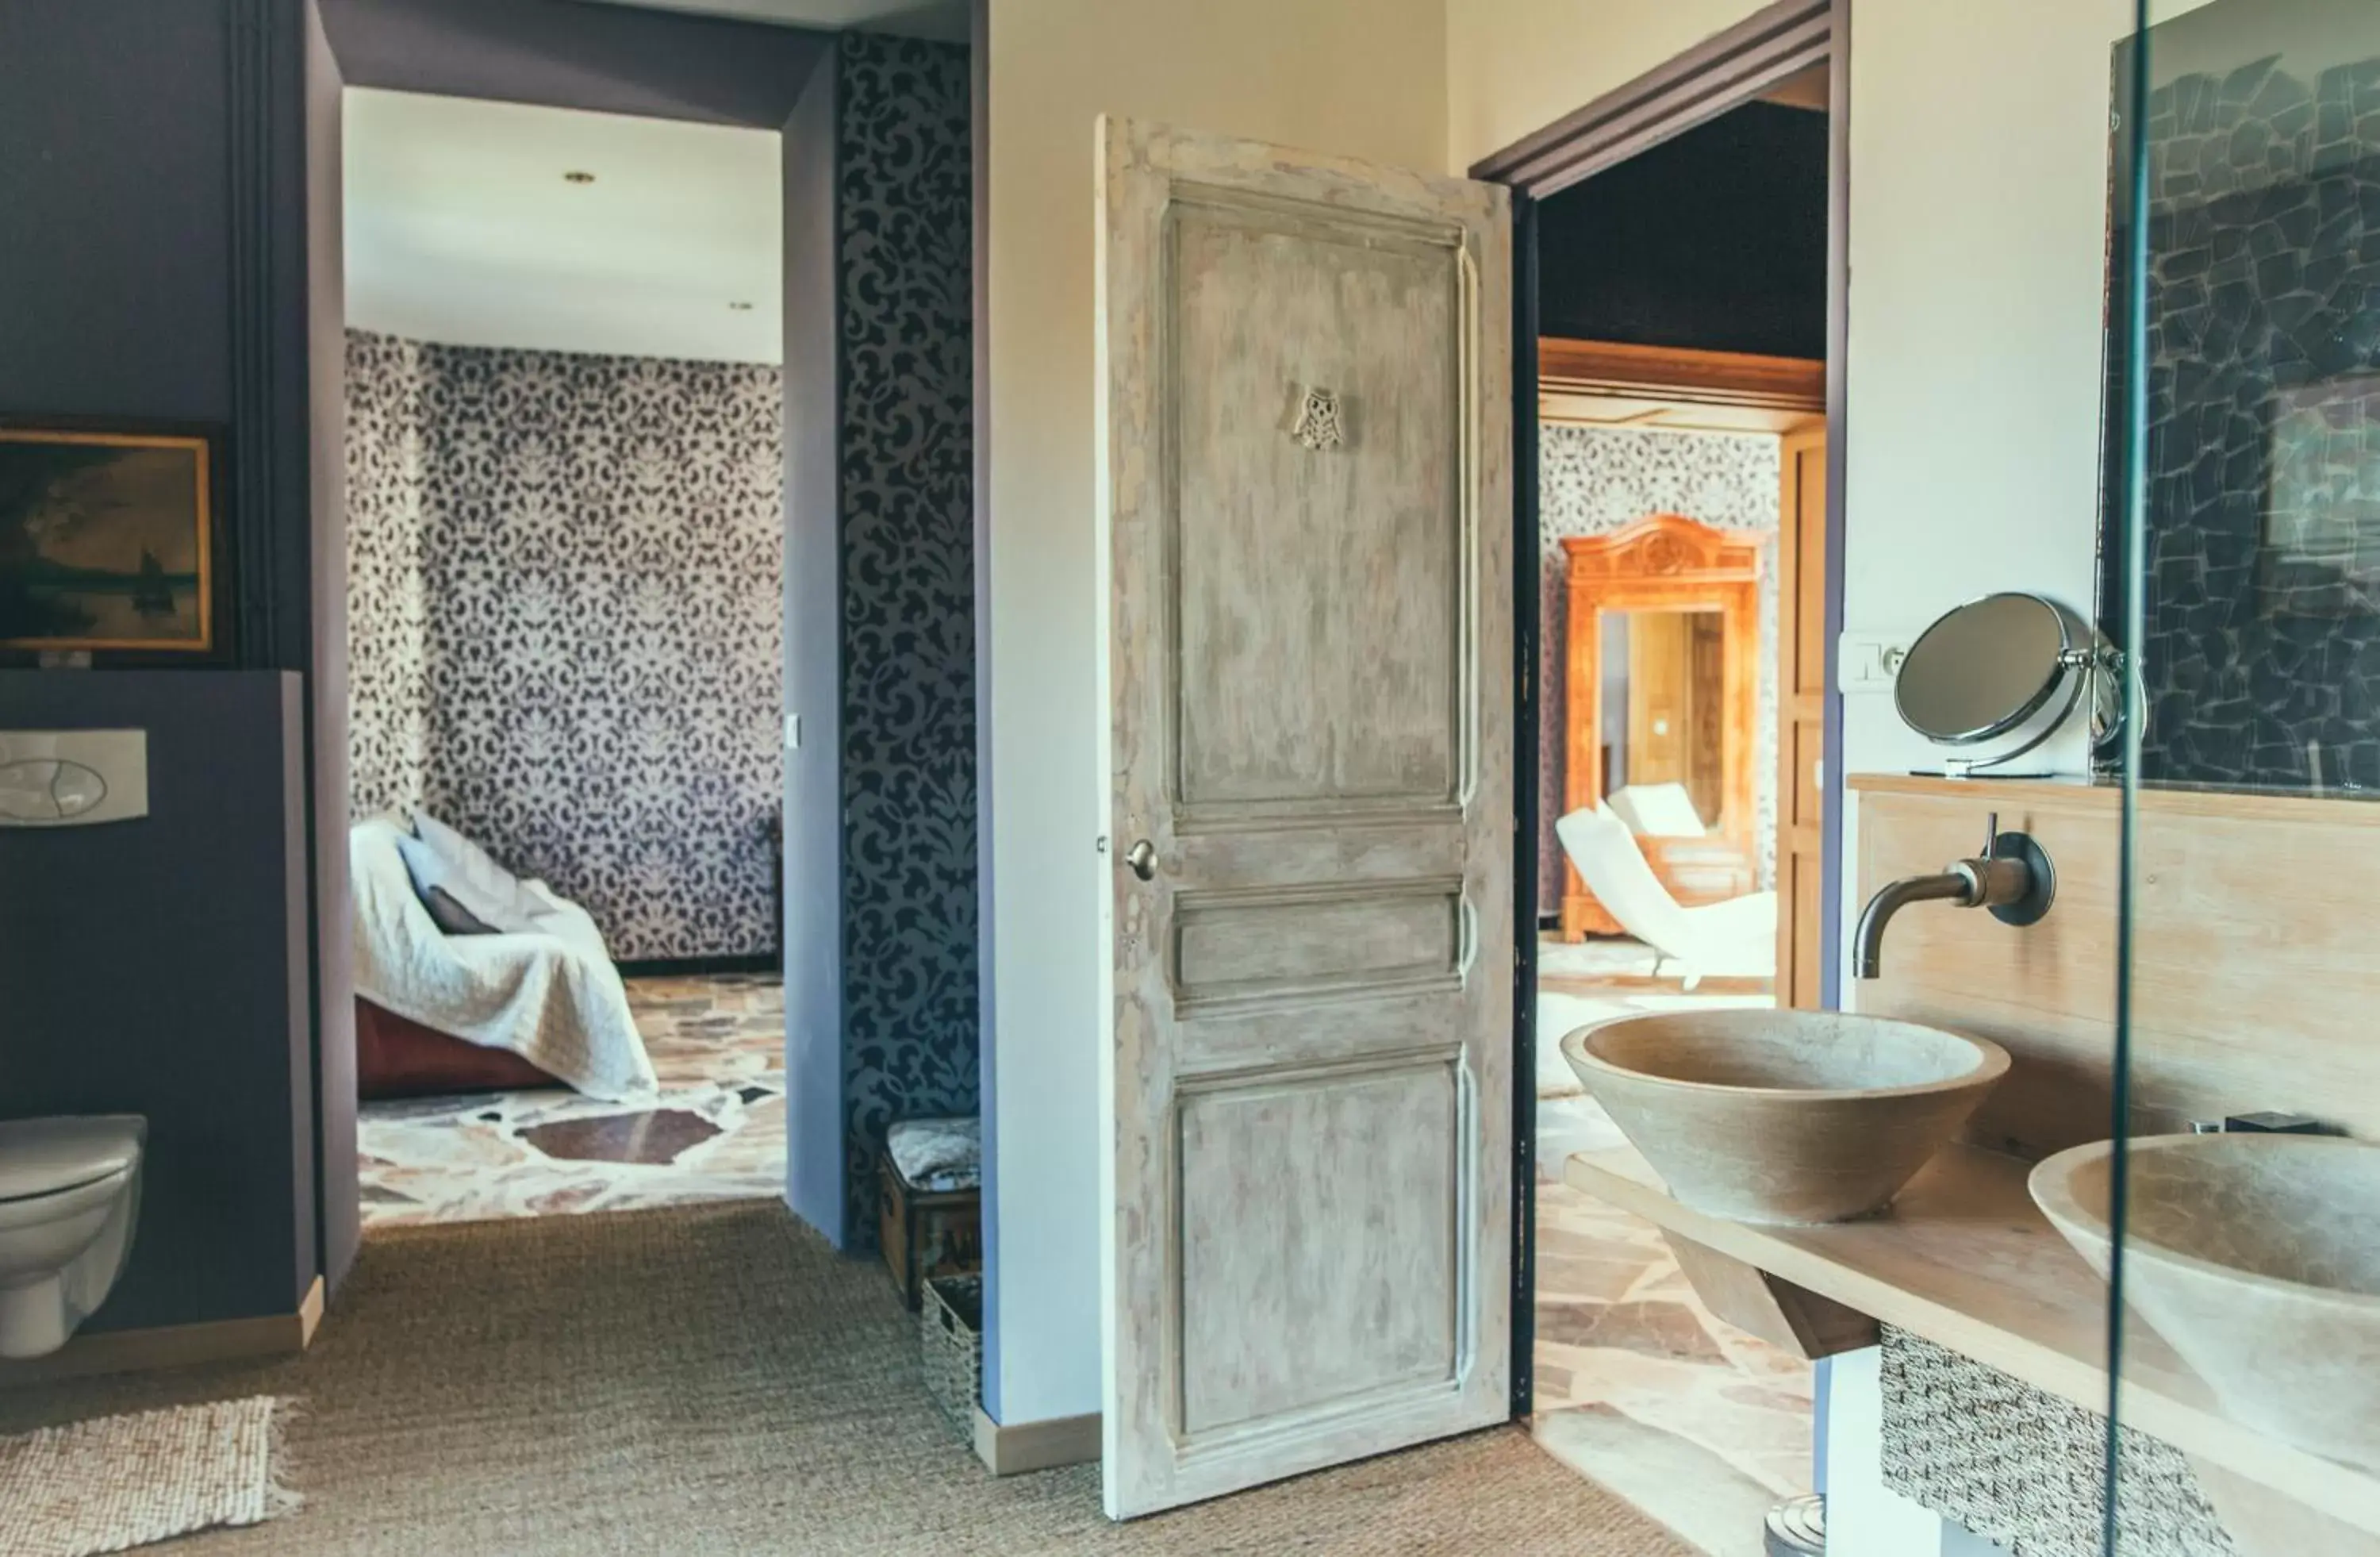 Photo of the whole room, Bathroom in Le Jardin de LaCoste